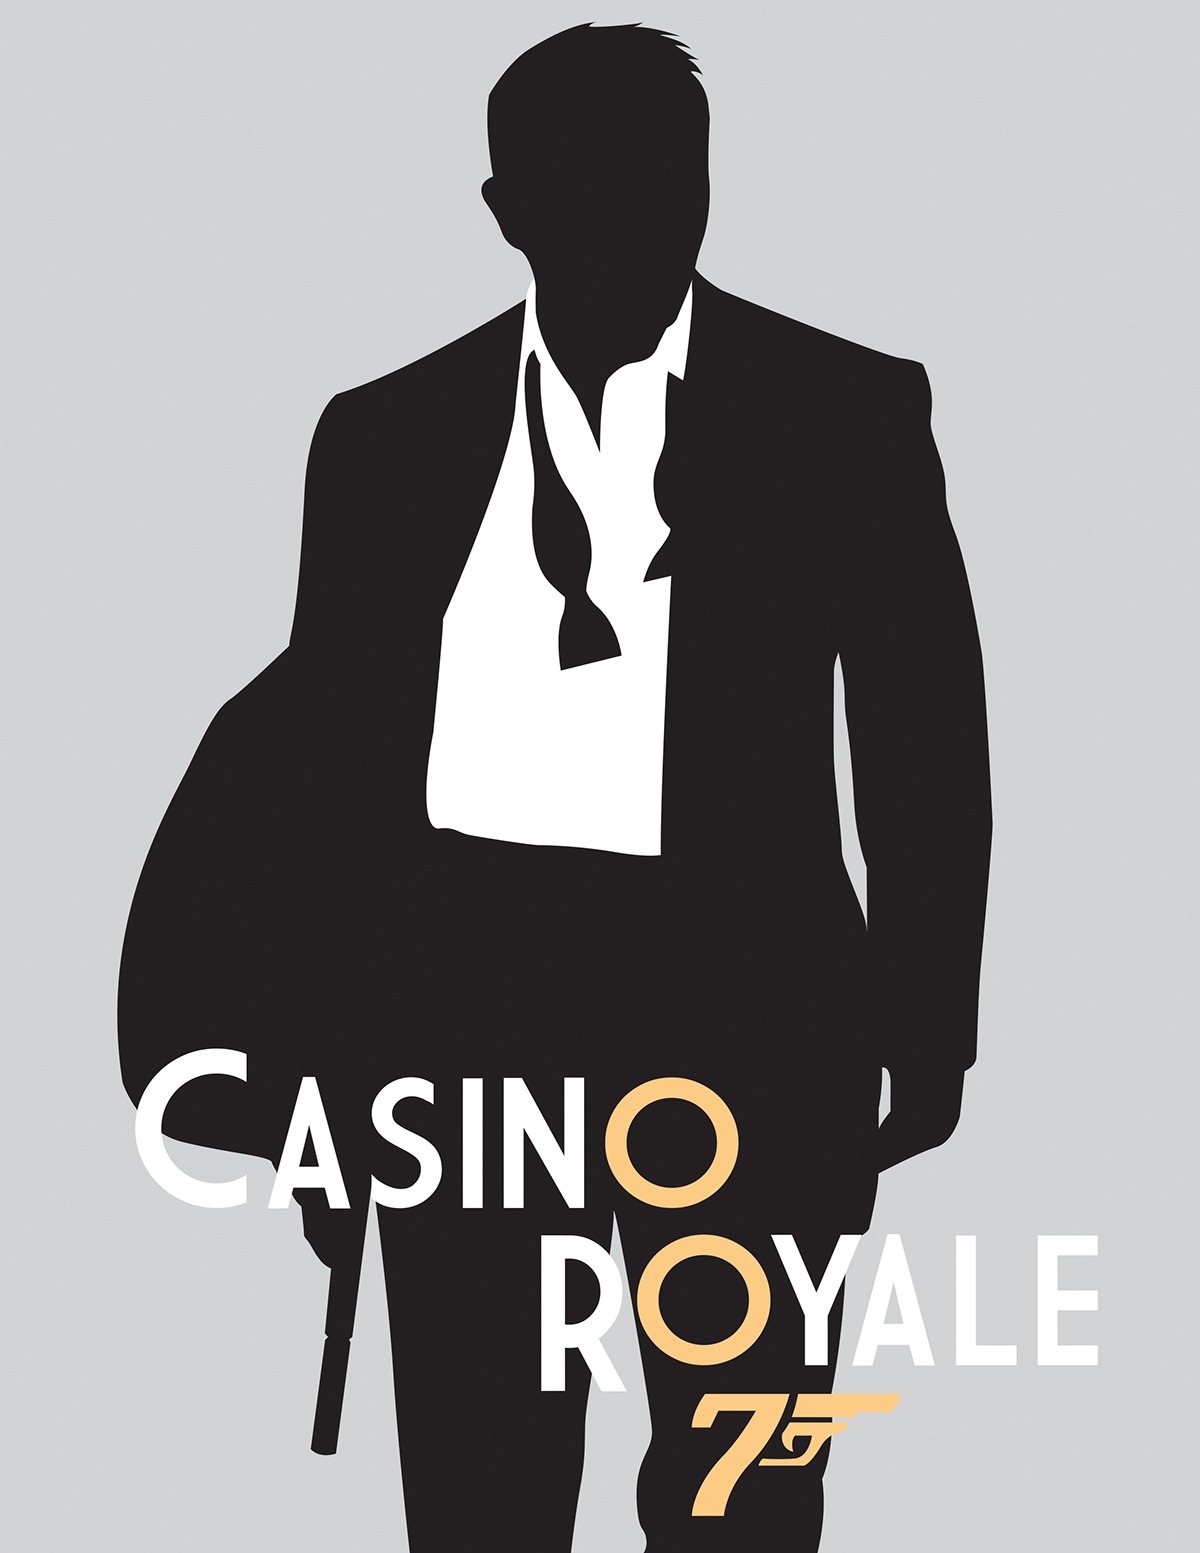 james bond movie poster minimalist skyfall spectre quantum of solace casino royale